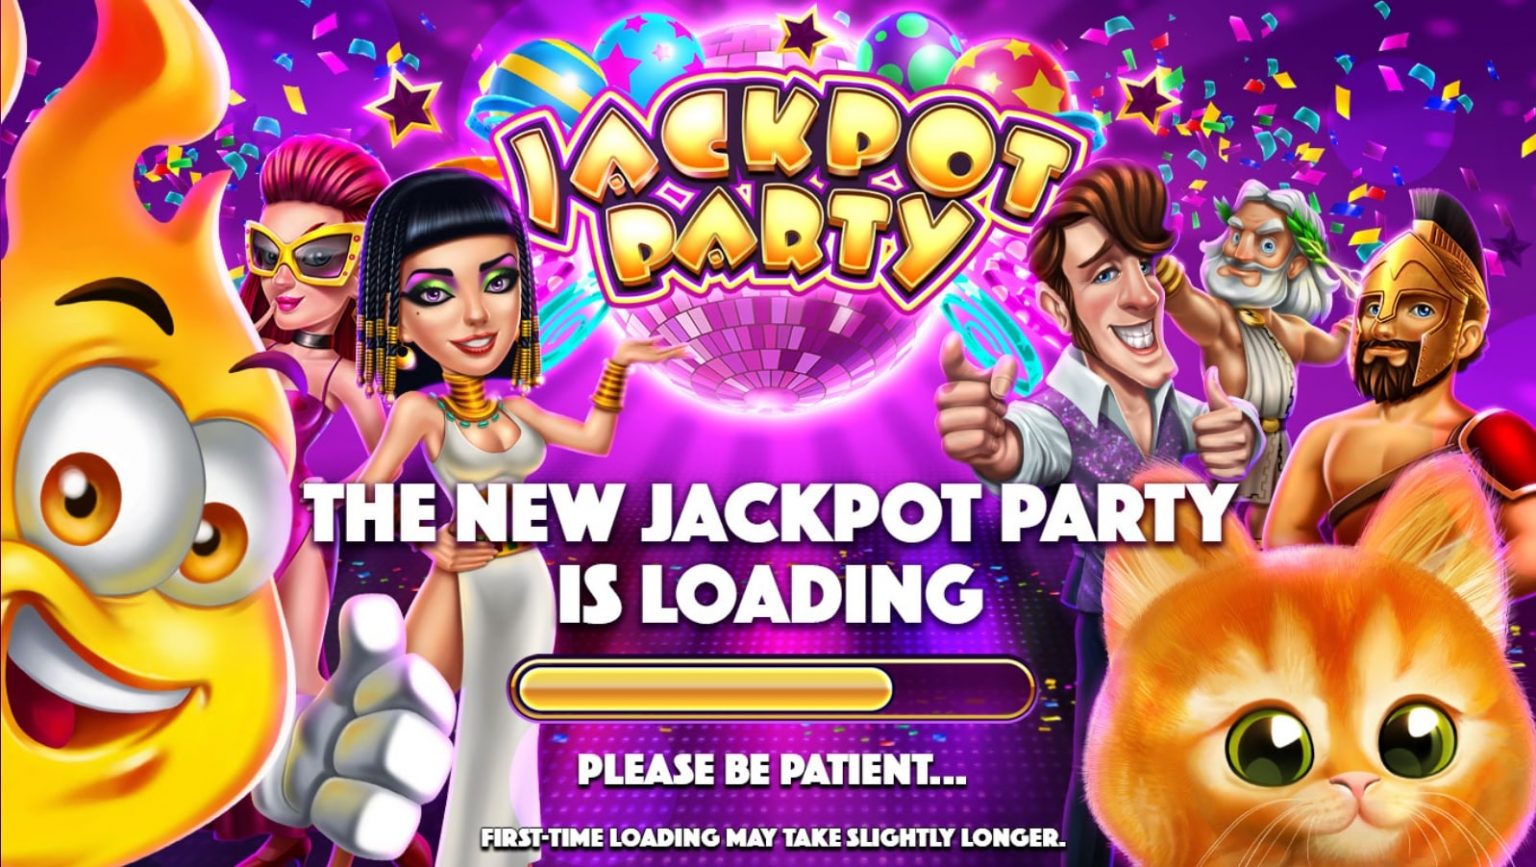 jackpot party casino slots on facebook